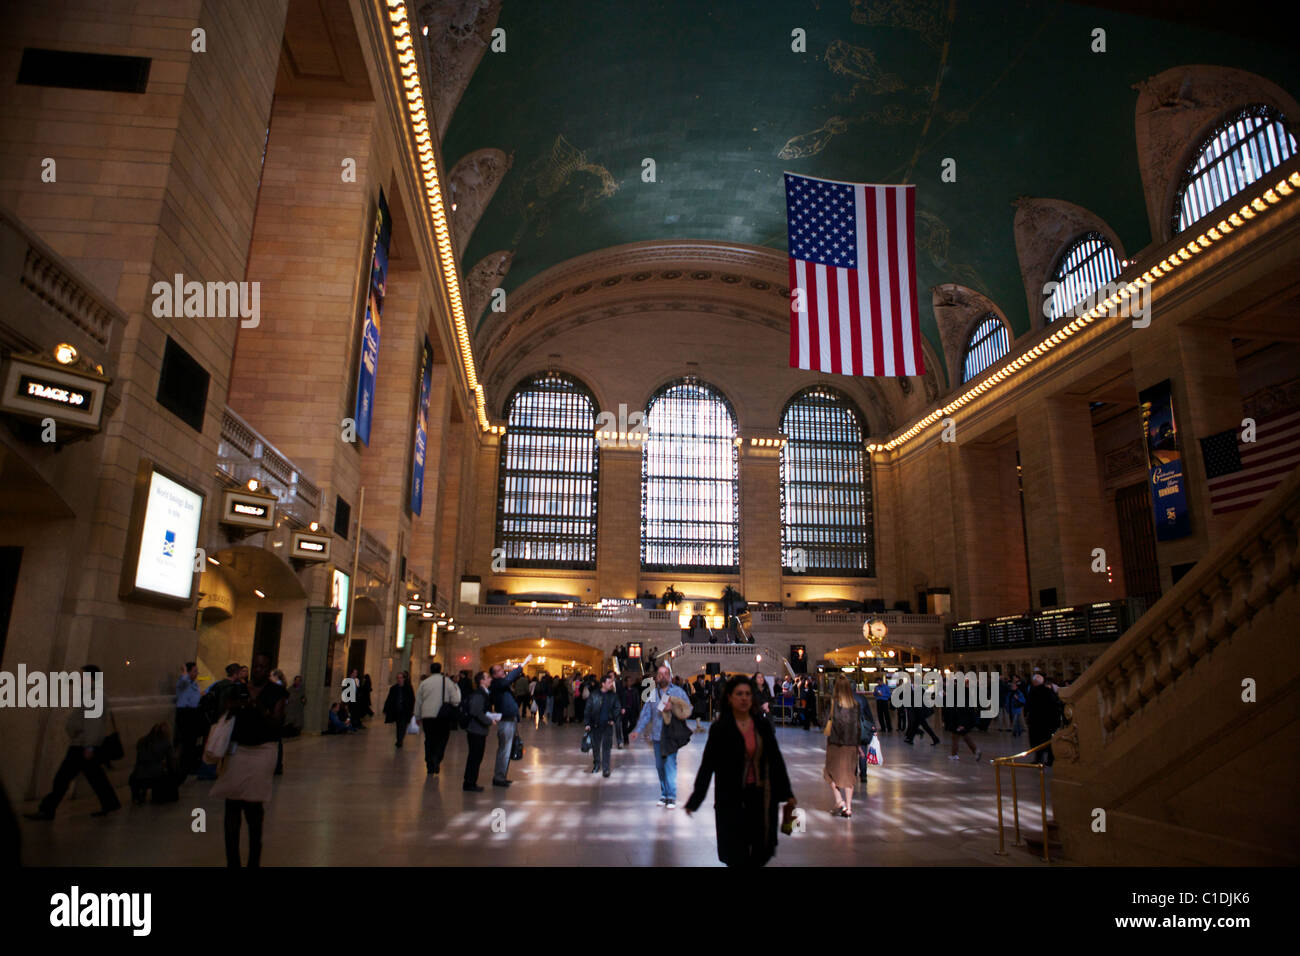 The interior of Grand Central Station New York Manhattan USA Stock Photo